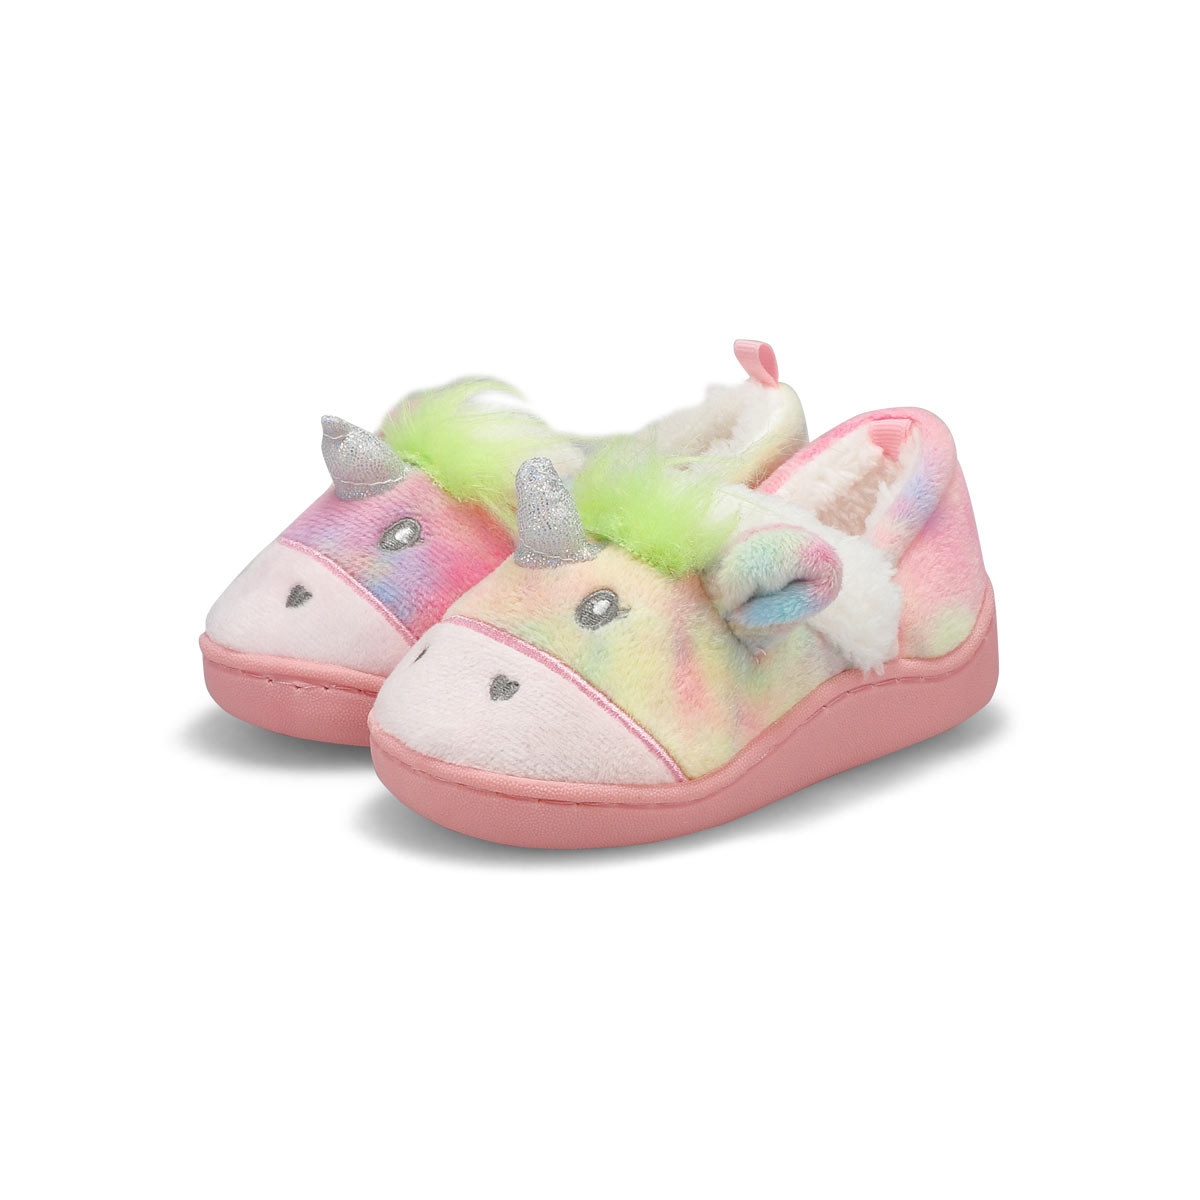 Infants' G Unicorn-TD Plush Slipper - Rainbow